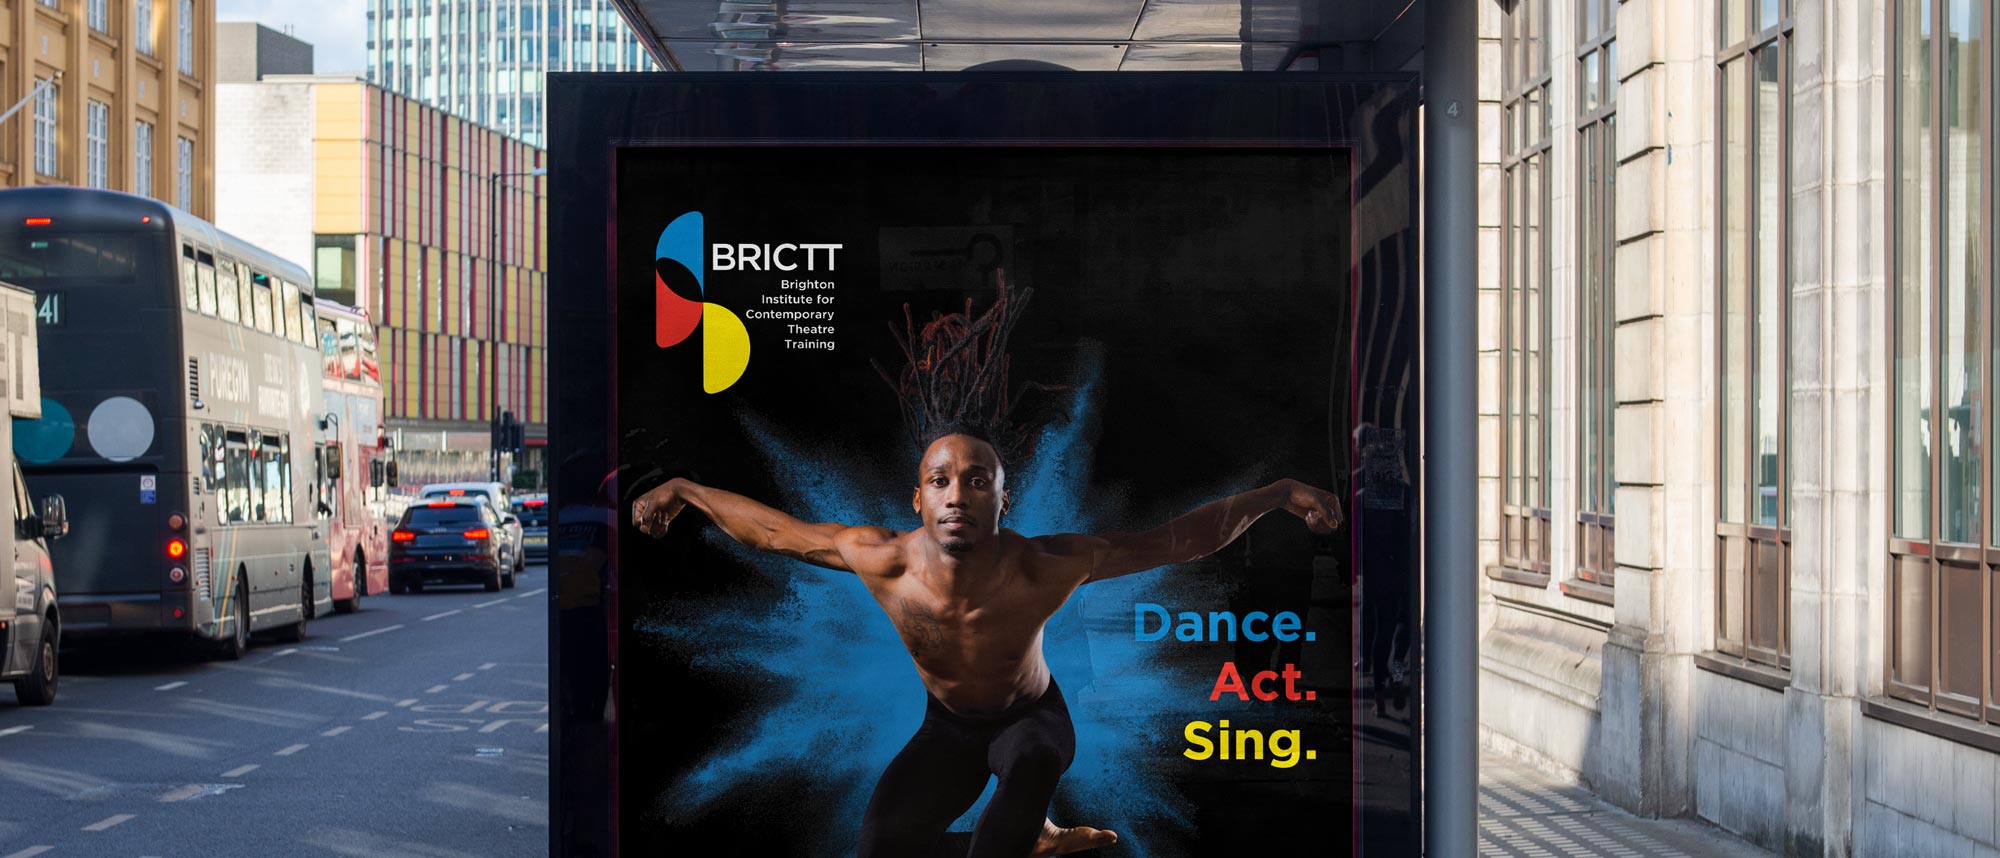 BRICTT - Branding